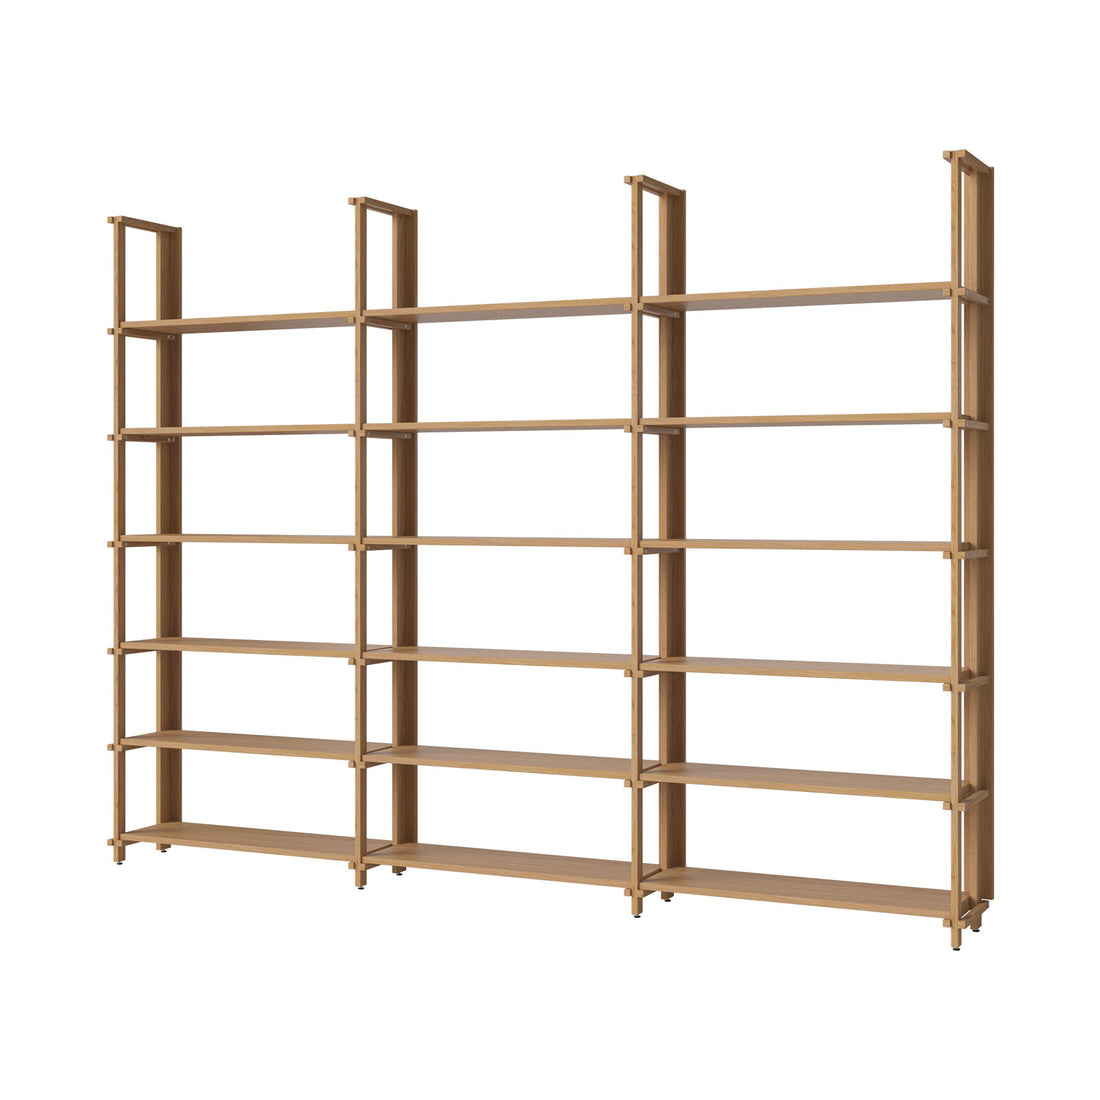 Friedman Shelving Unit | 3x6 - 18 Narrow Shelves